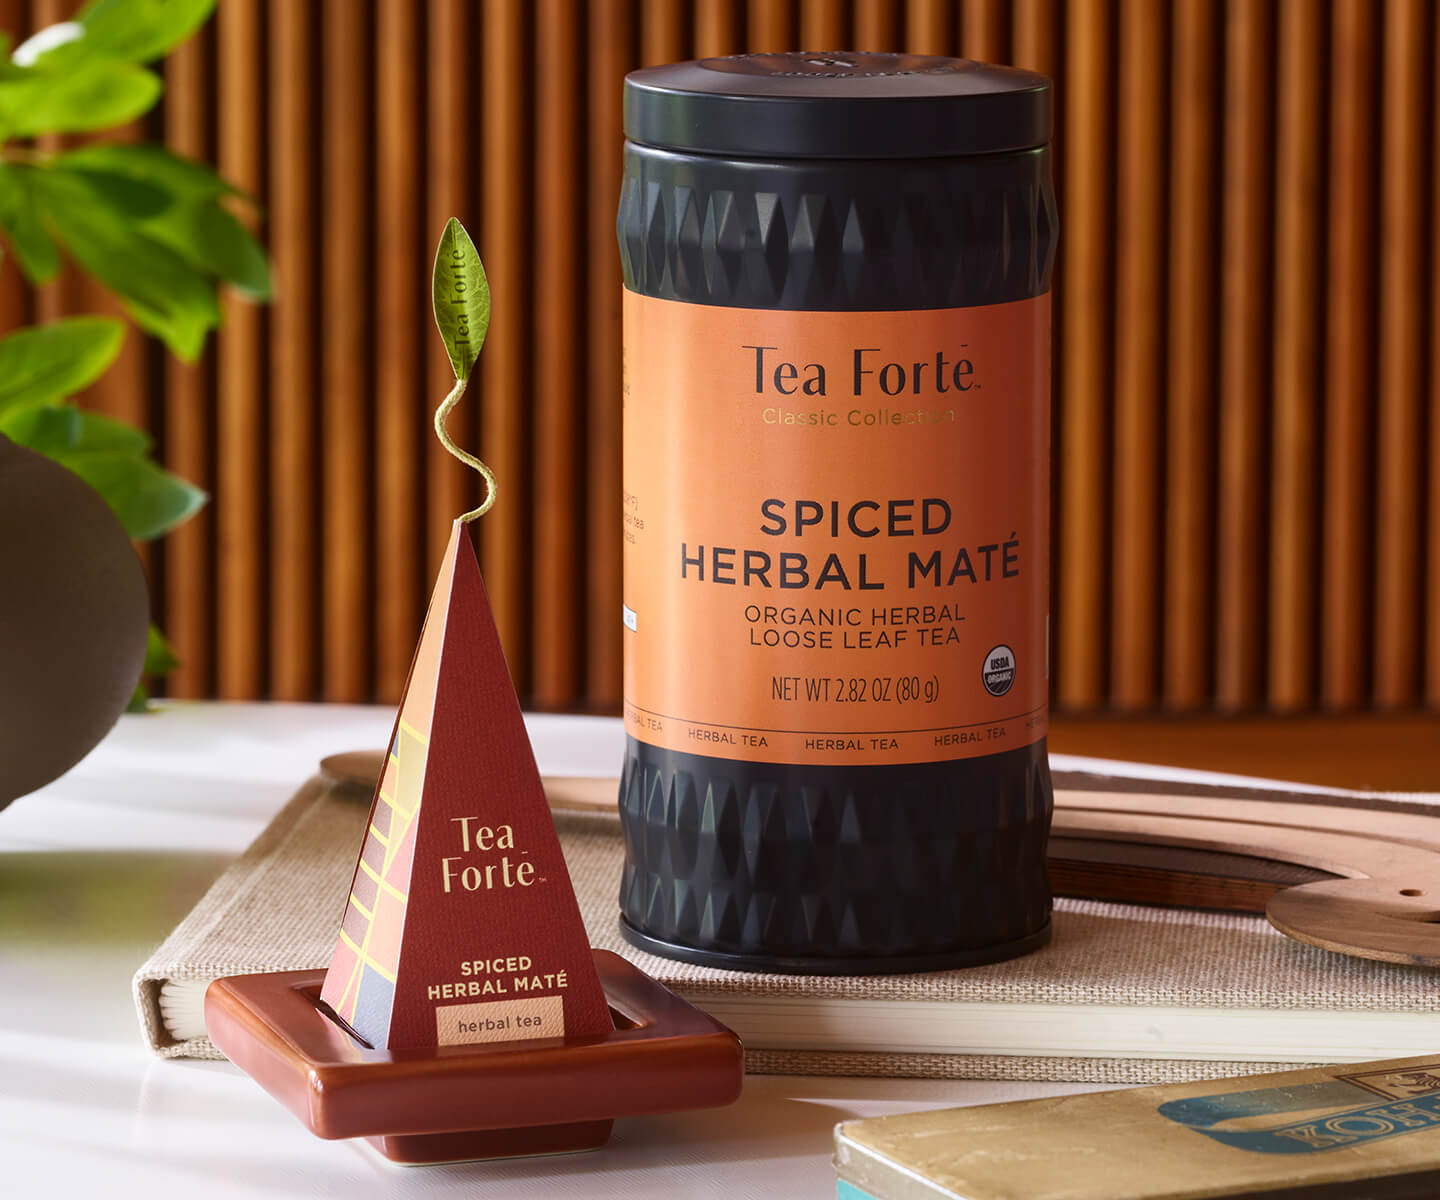 Spiced Herbal Maté Tea Canister with pyramid tea infuser